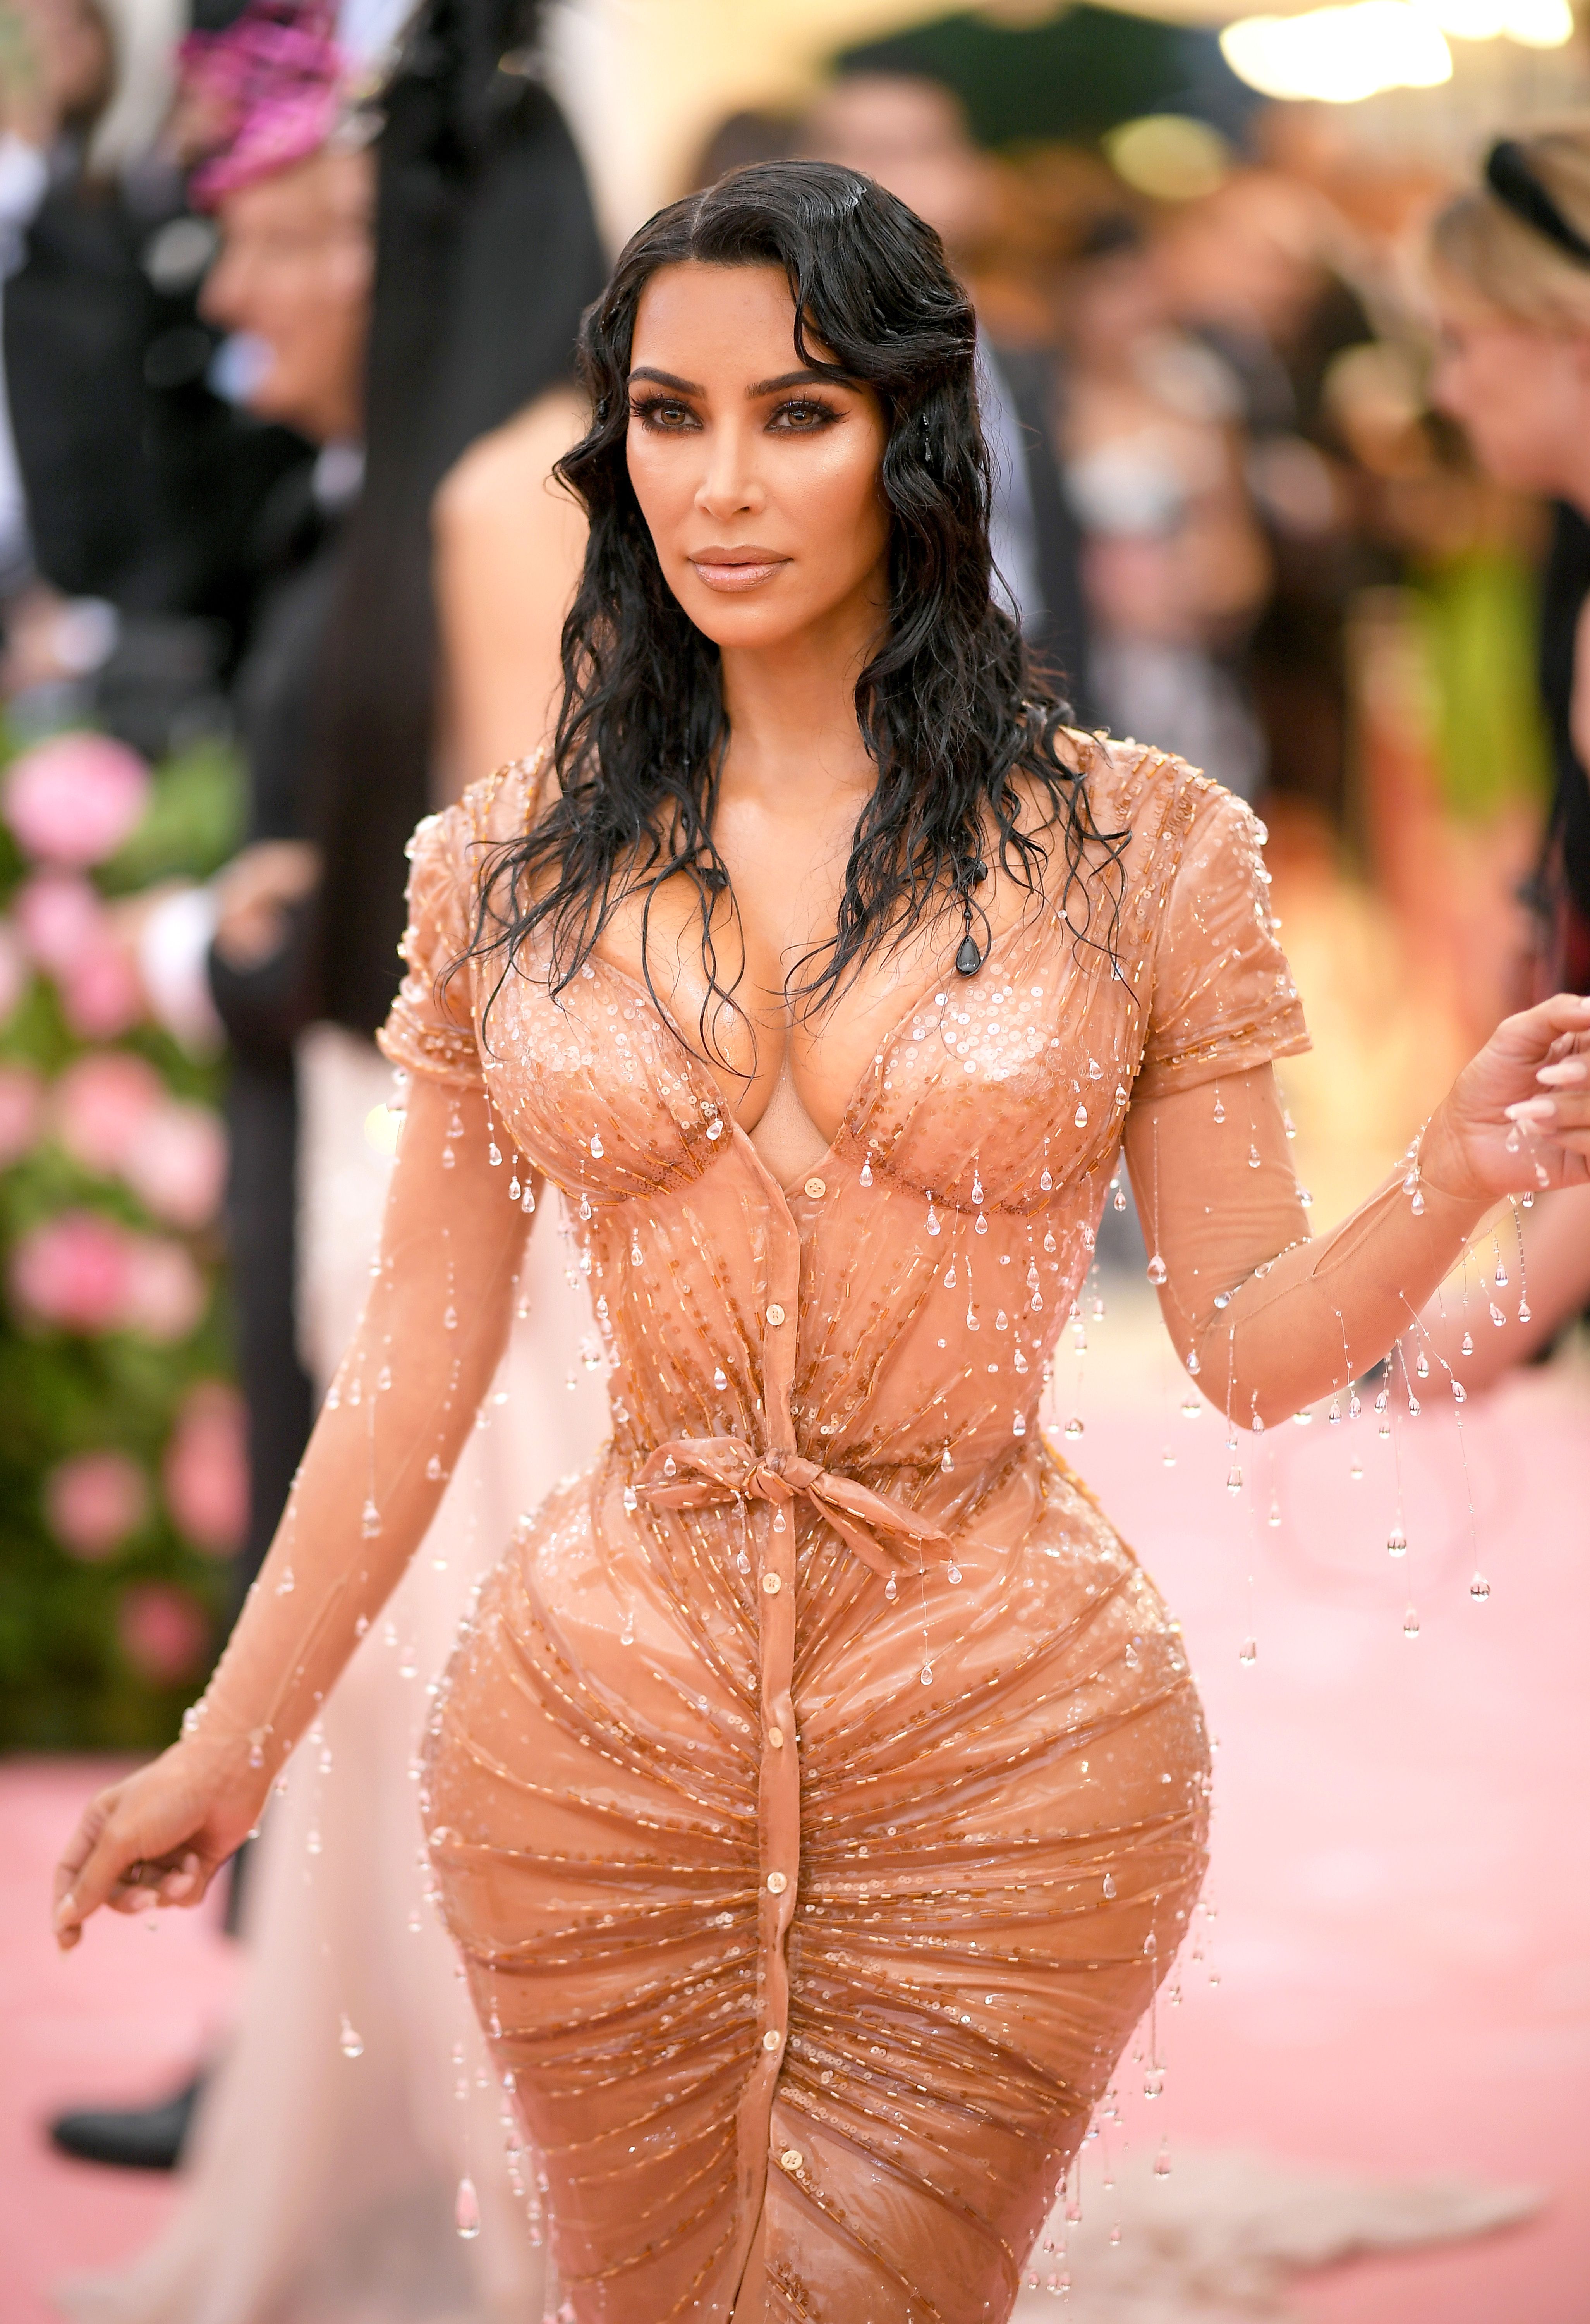 Kim Kardashian on Why Shes Ending Her